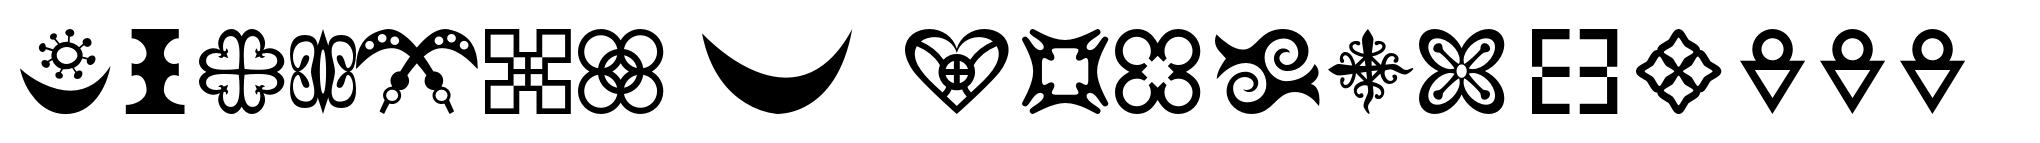 Adinkra Symbols Regular image